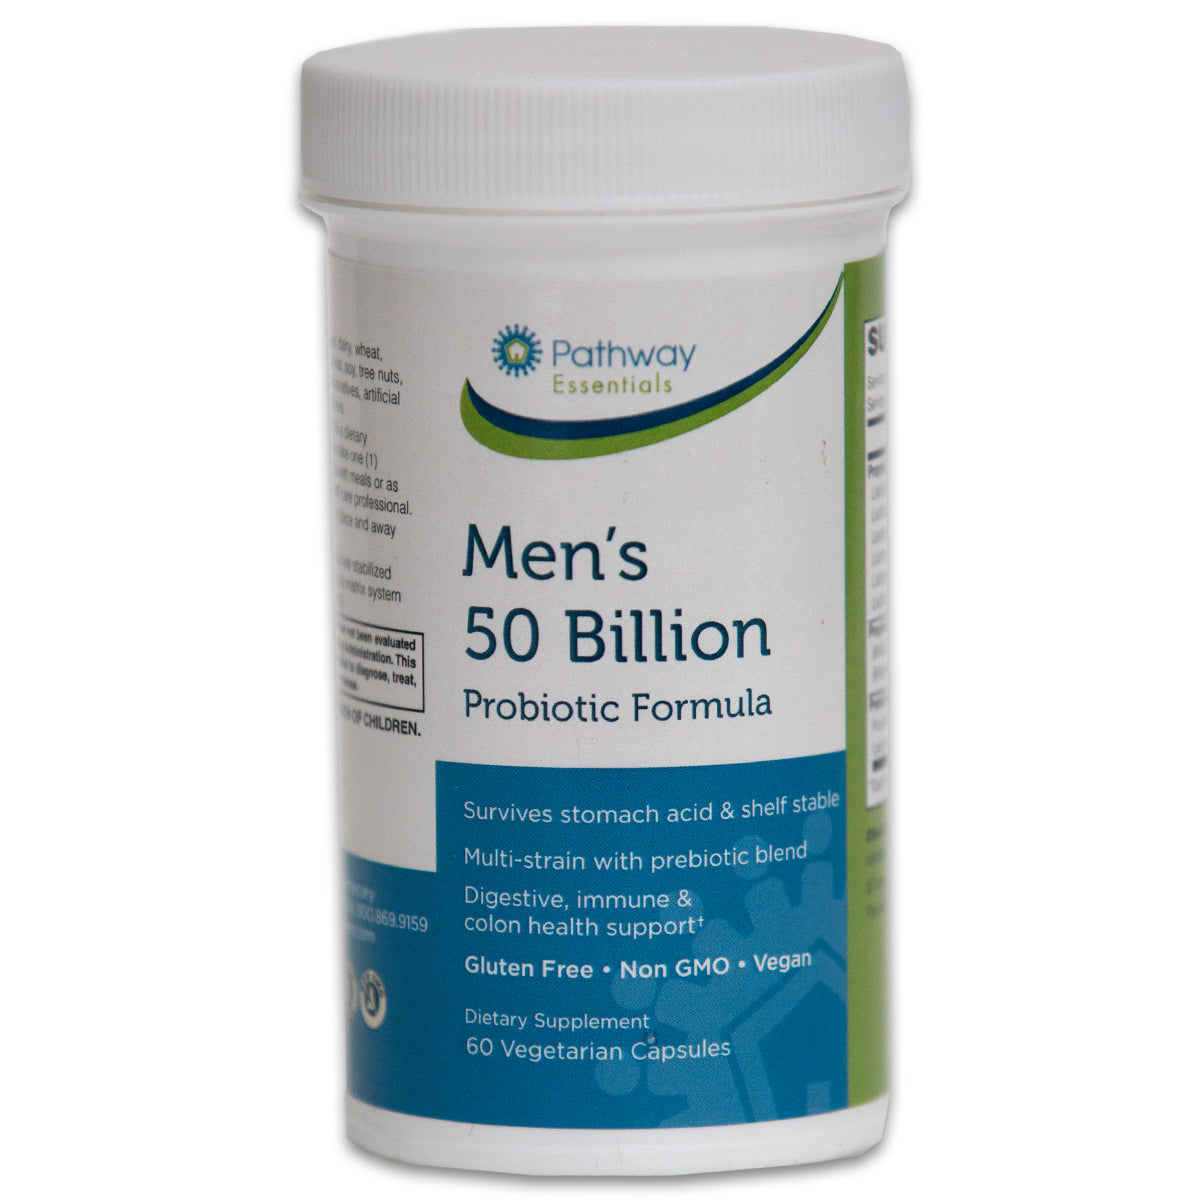 Men’s 50 Billion Probiotic Formula